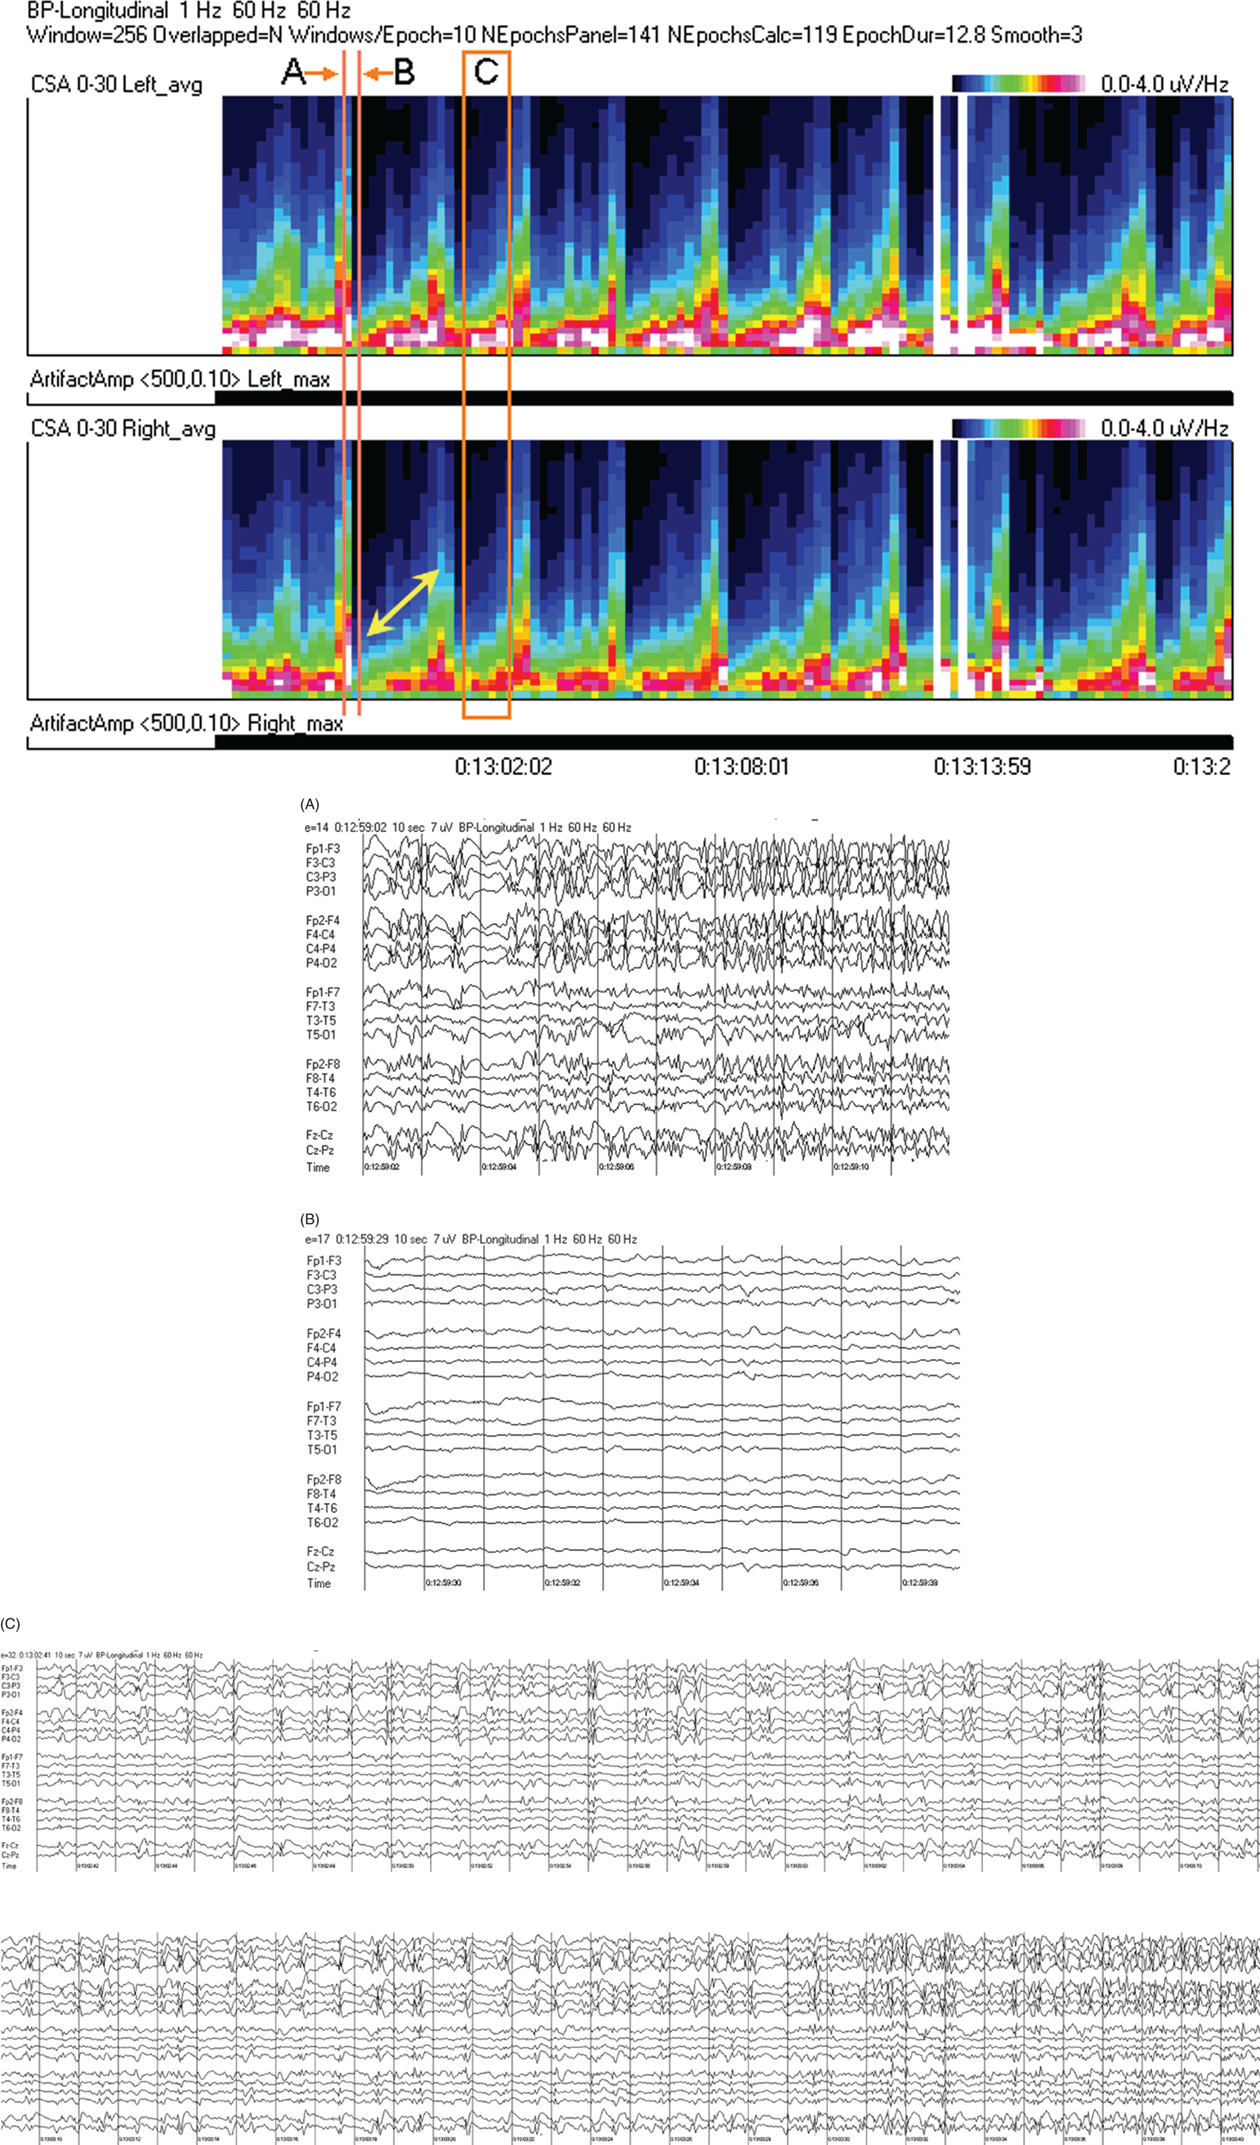 Schematic illustration of spectrogram basics: cyclic nonconvulsive seizures. (c) One minute of raw EEG at C: gradual buildup of epileptiform activity between seizures.